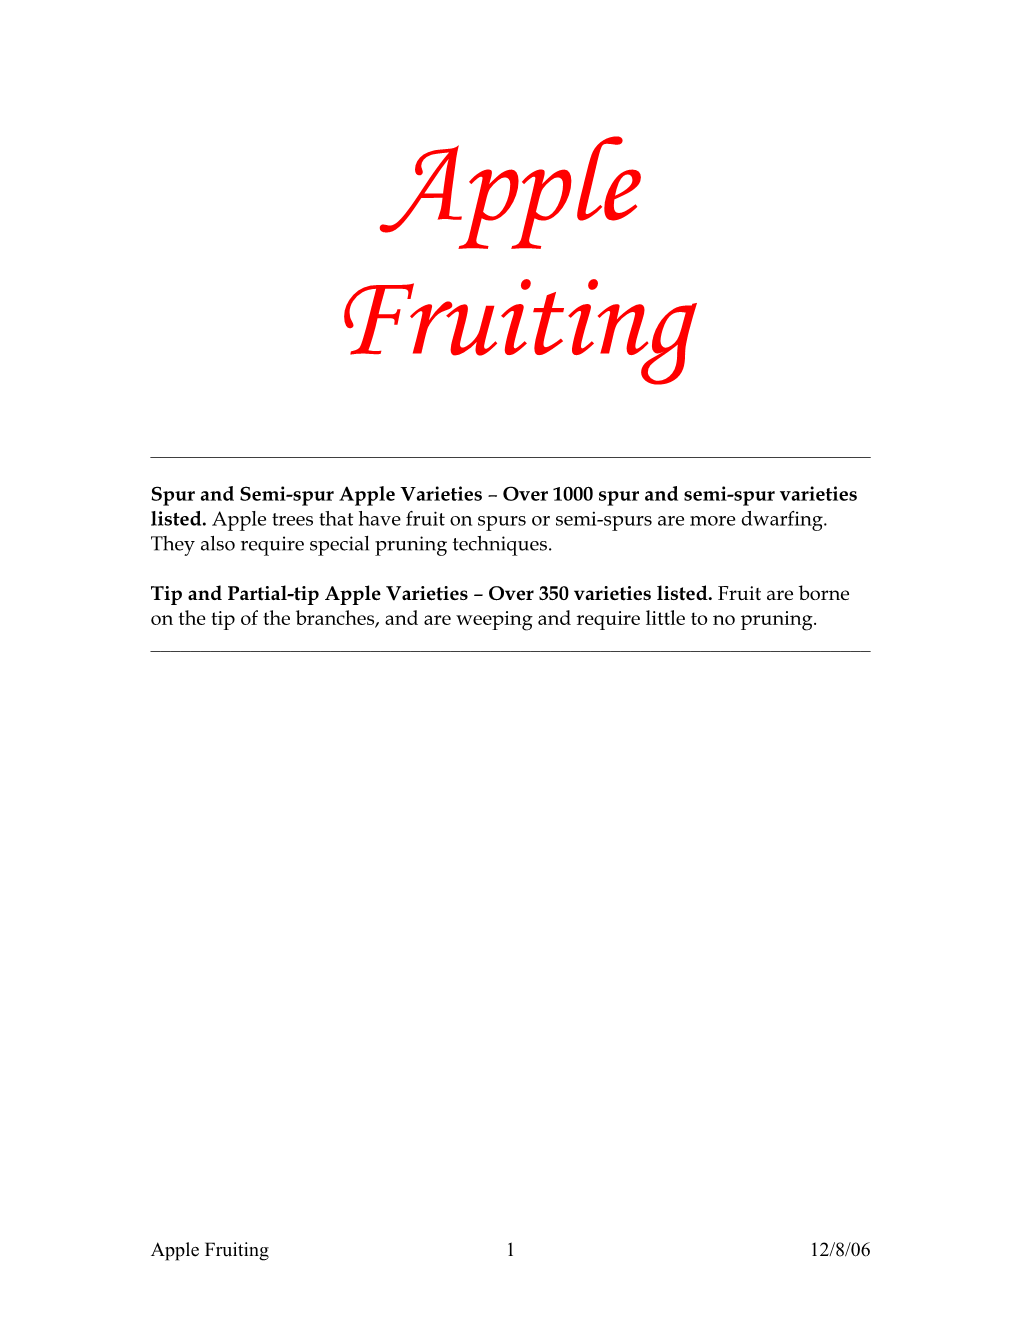 Apple Fruiting